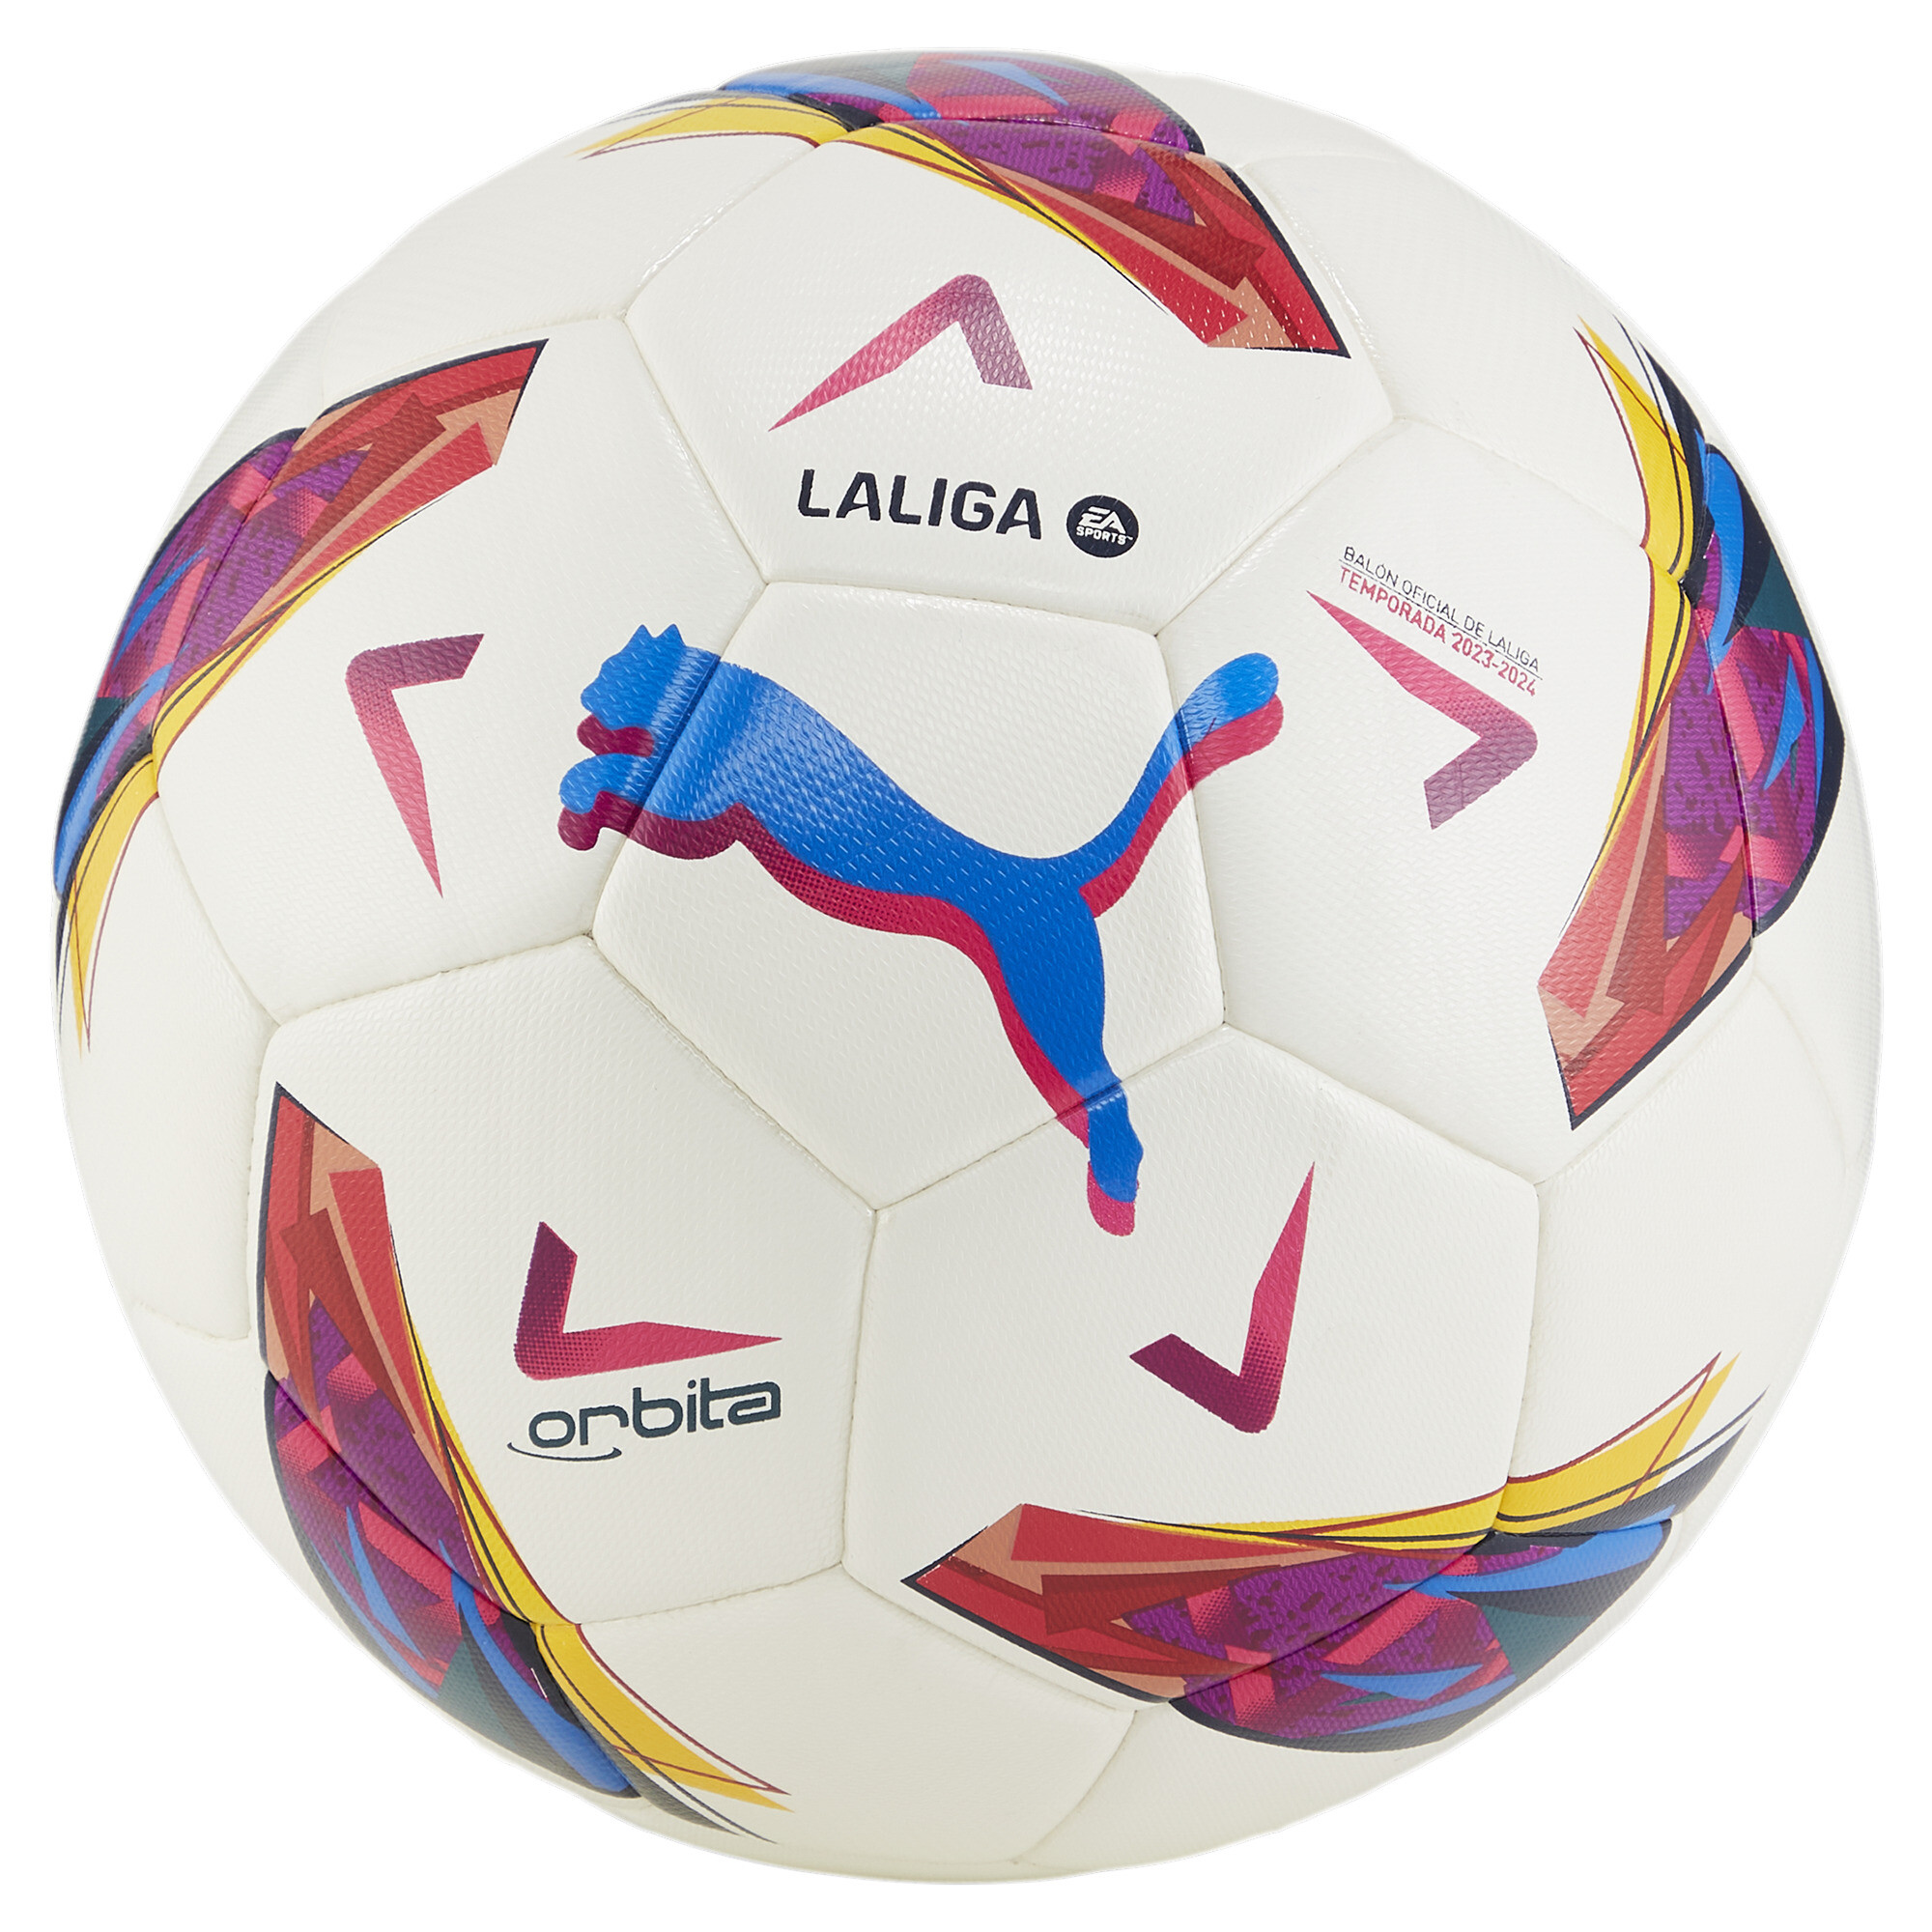 Puma Orbita La Liga Hybrid Training Football, White, Size 3, Accessories